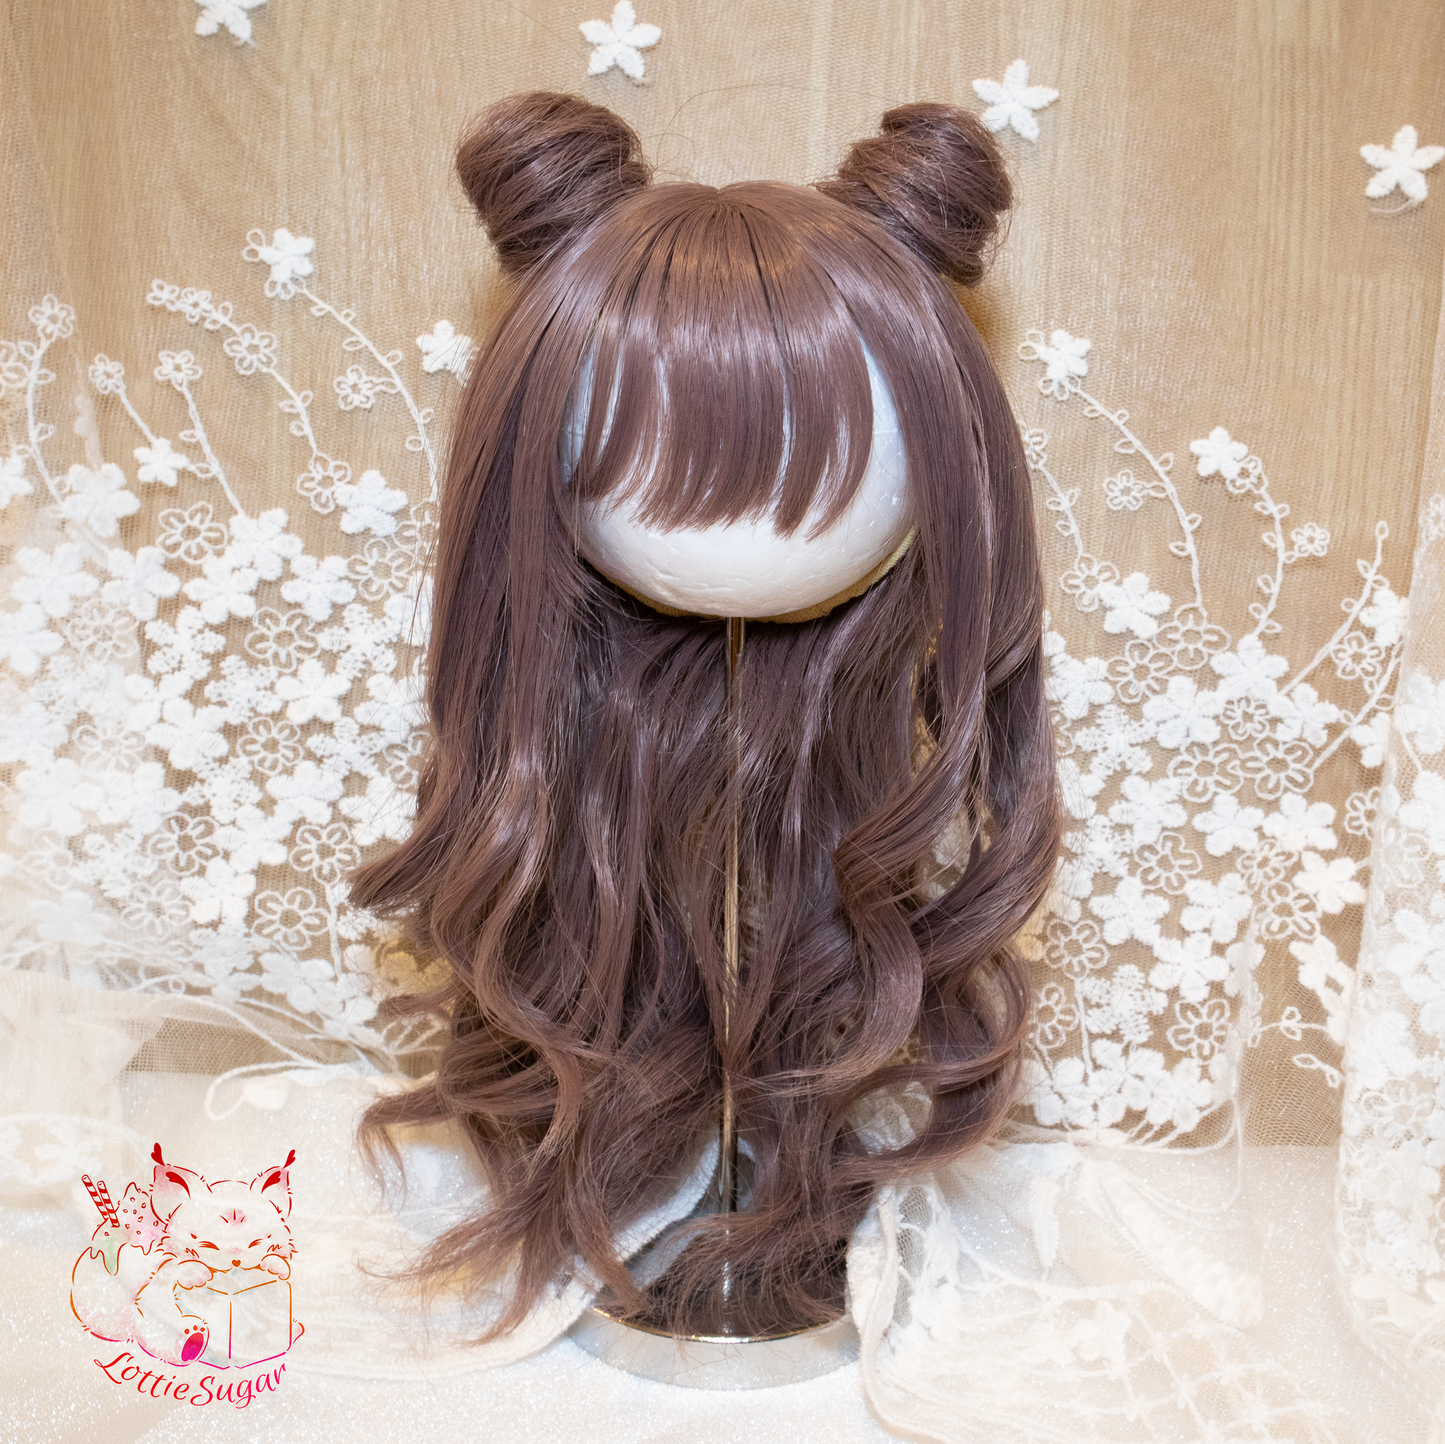 【Used】MiuCat - Dark Purple Bun Long Curly Hair【22cm Wig】